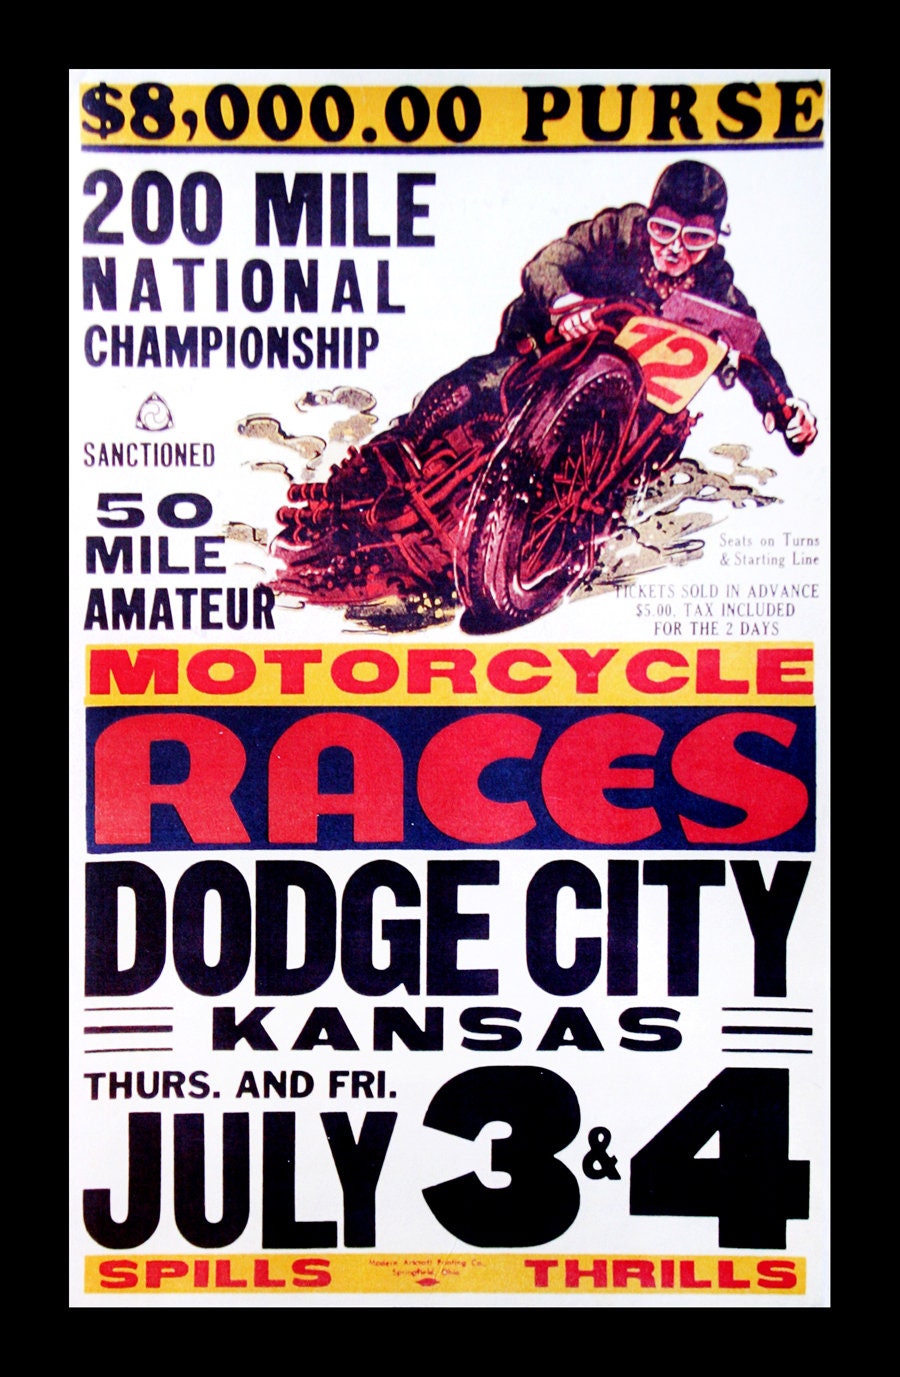 1951 Dodge City Kansas Motorcycle Racing Poster Print